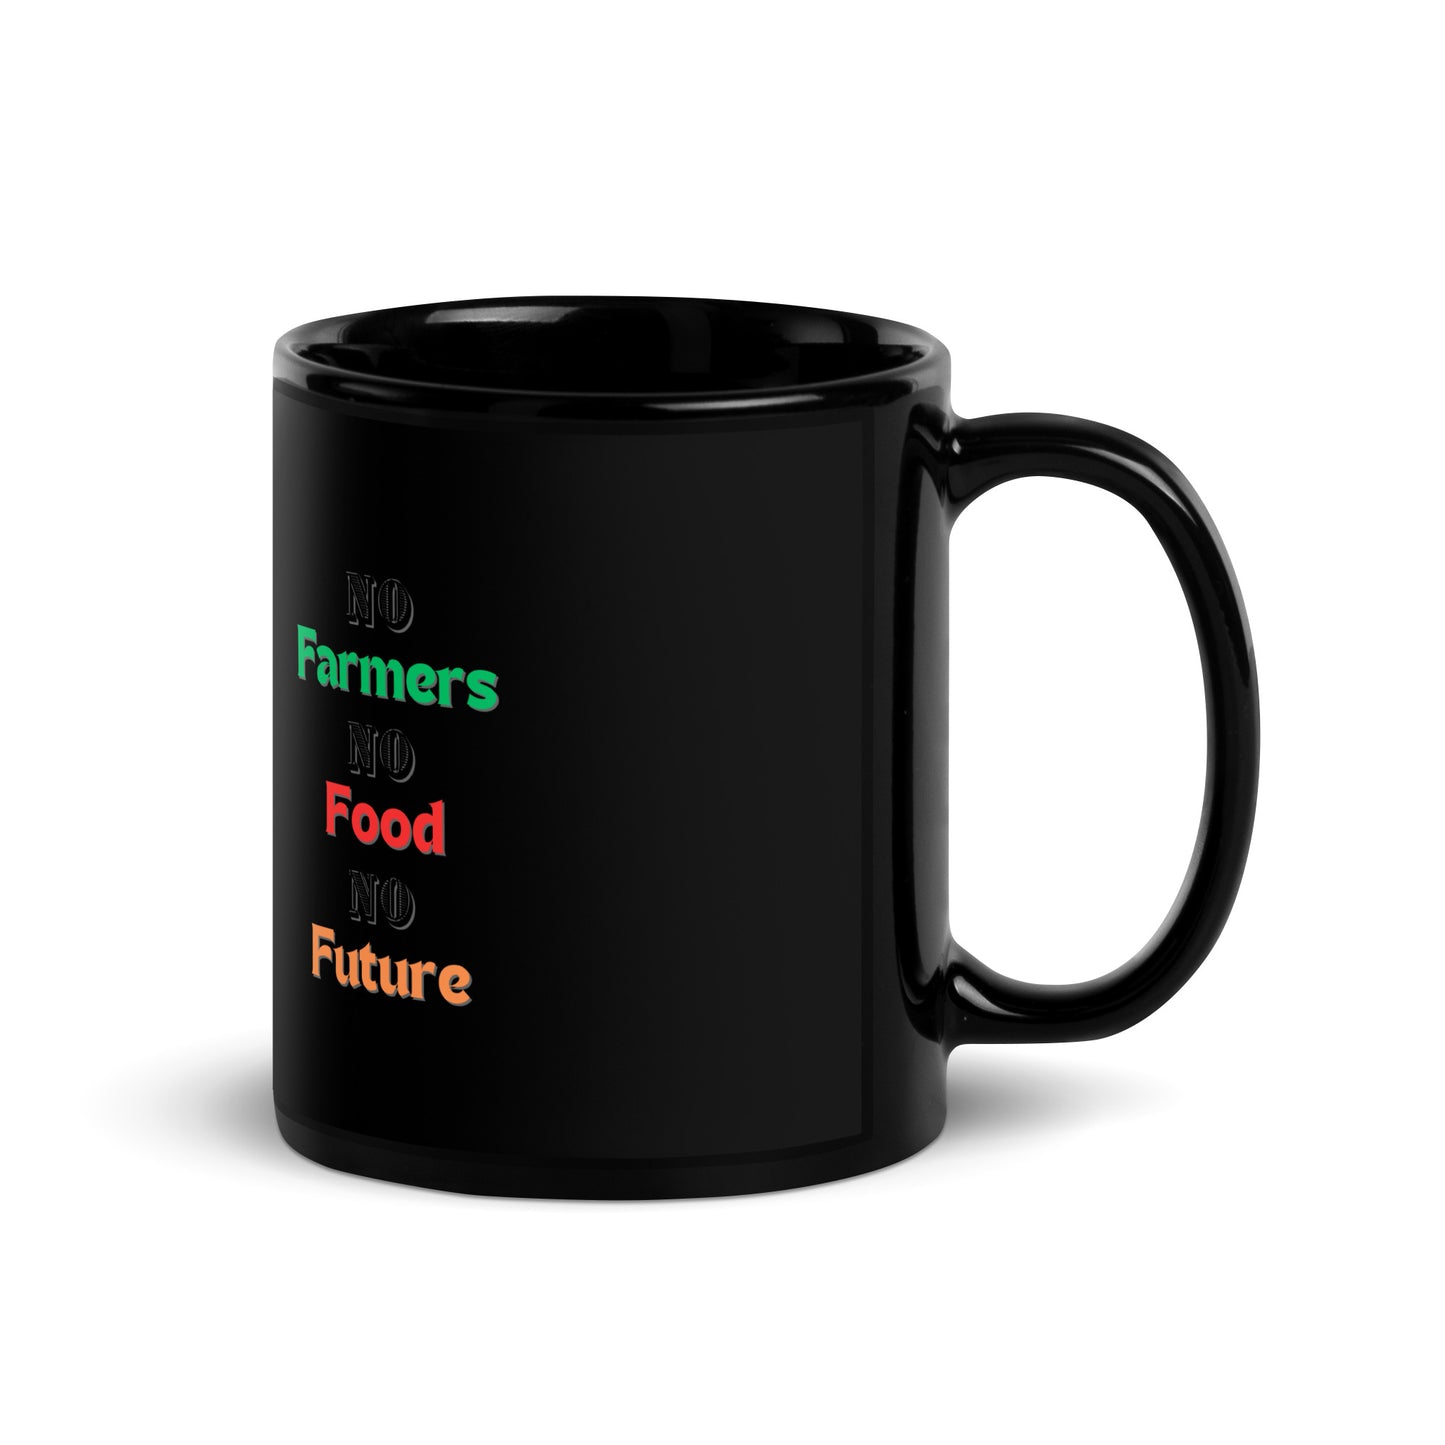 0-A-00 No Farmers NO Food No Future Black Glossy Mug